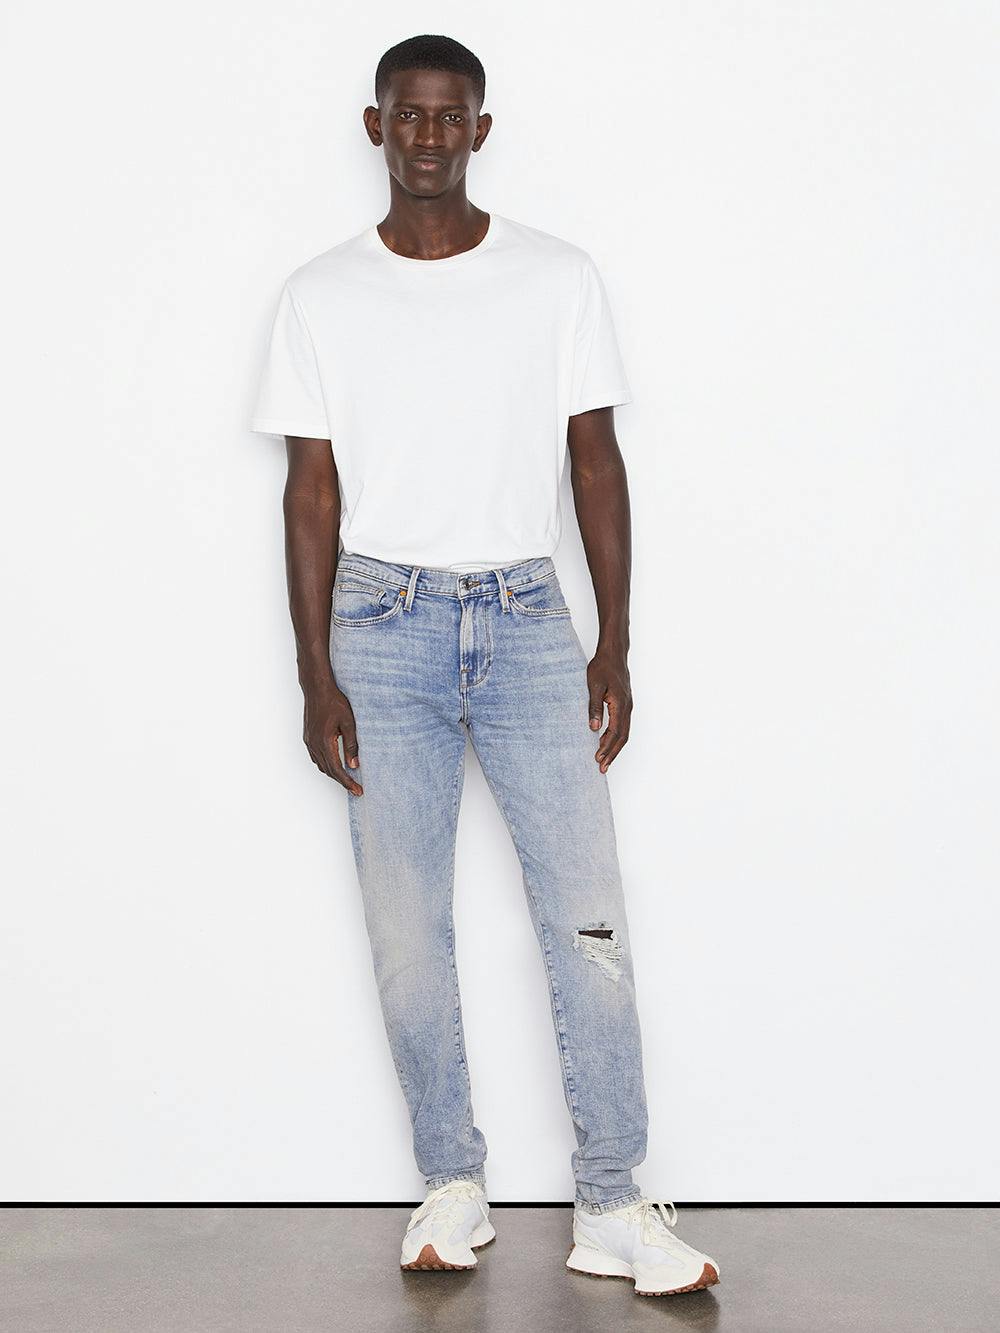 jeans full body view alt:hover